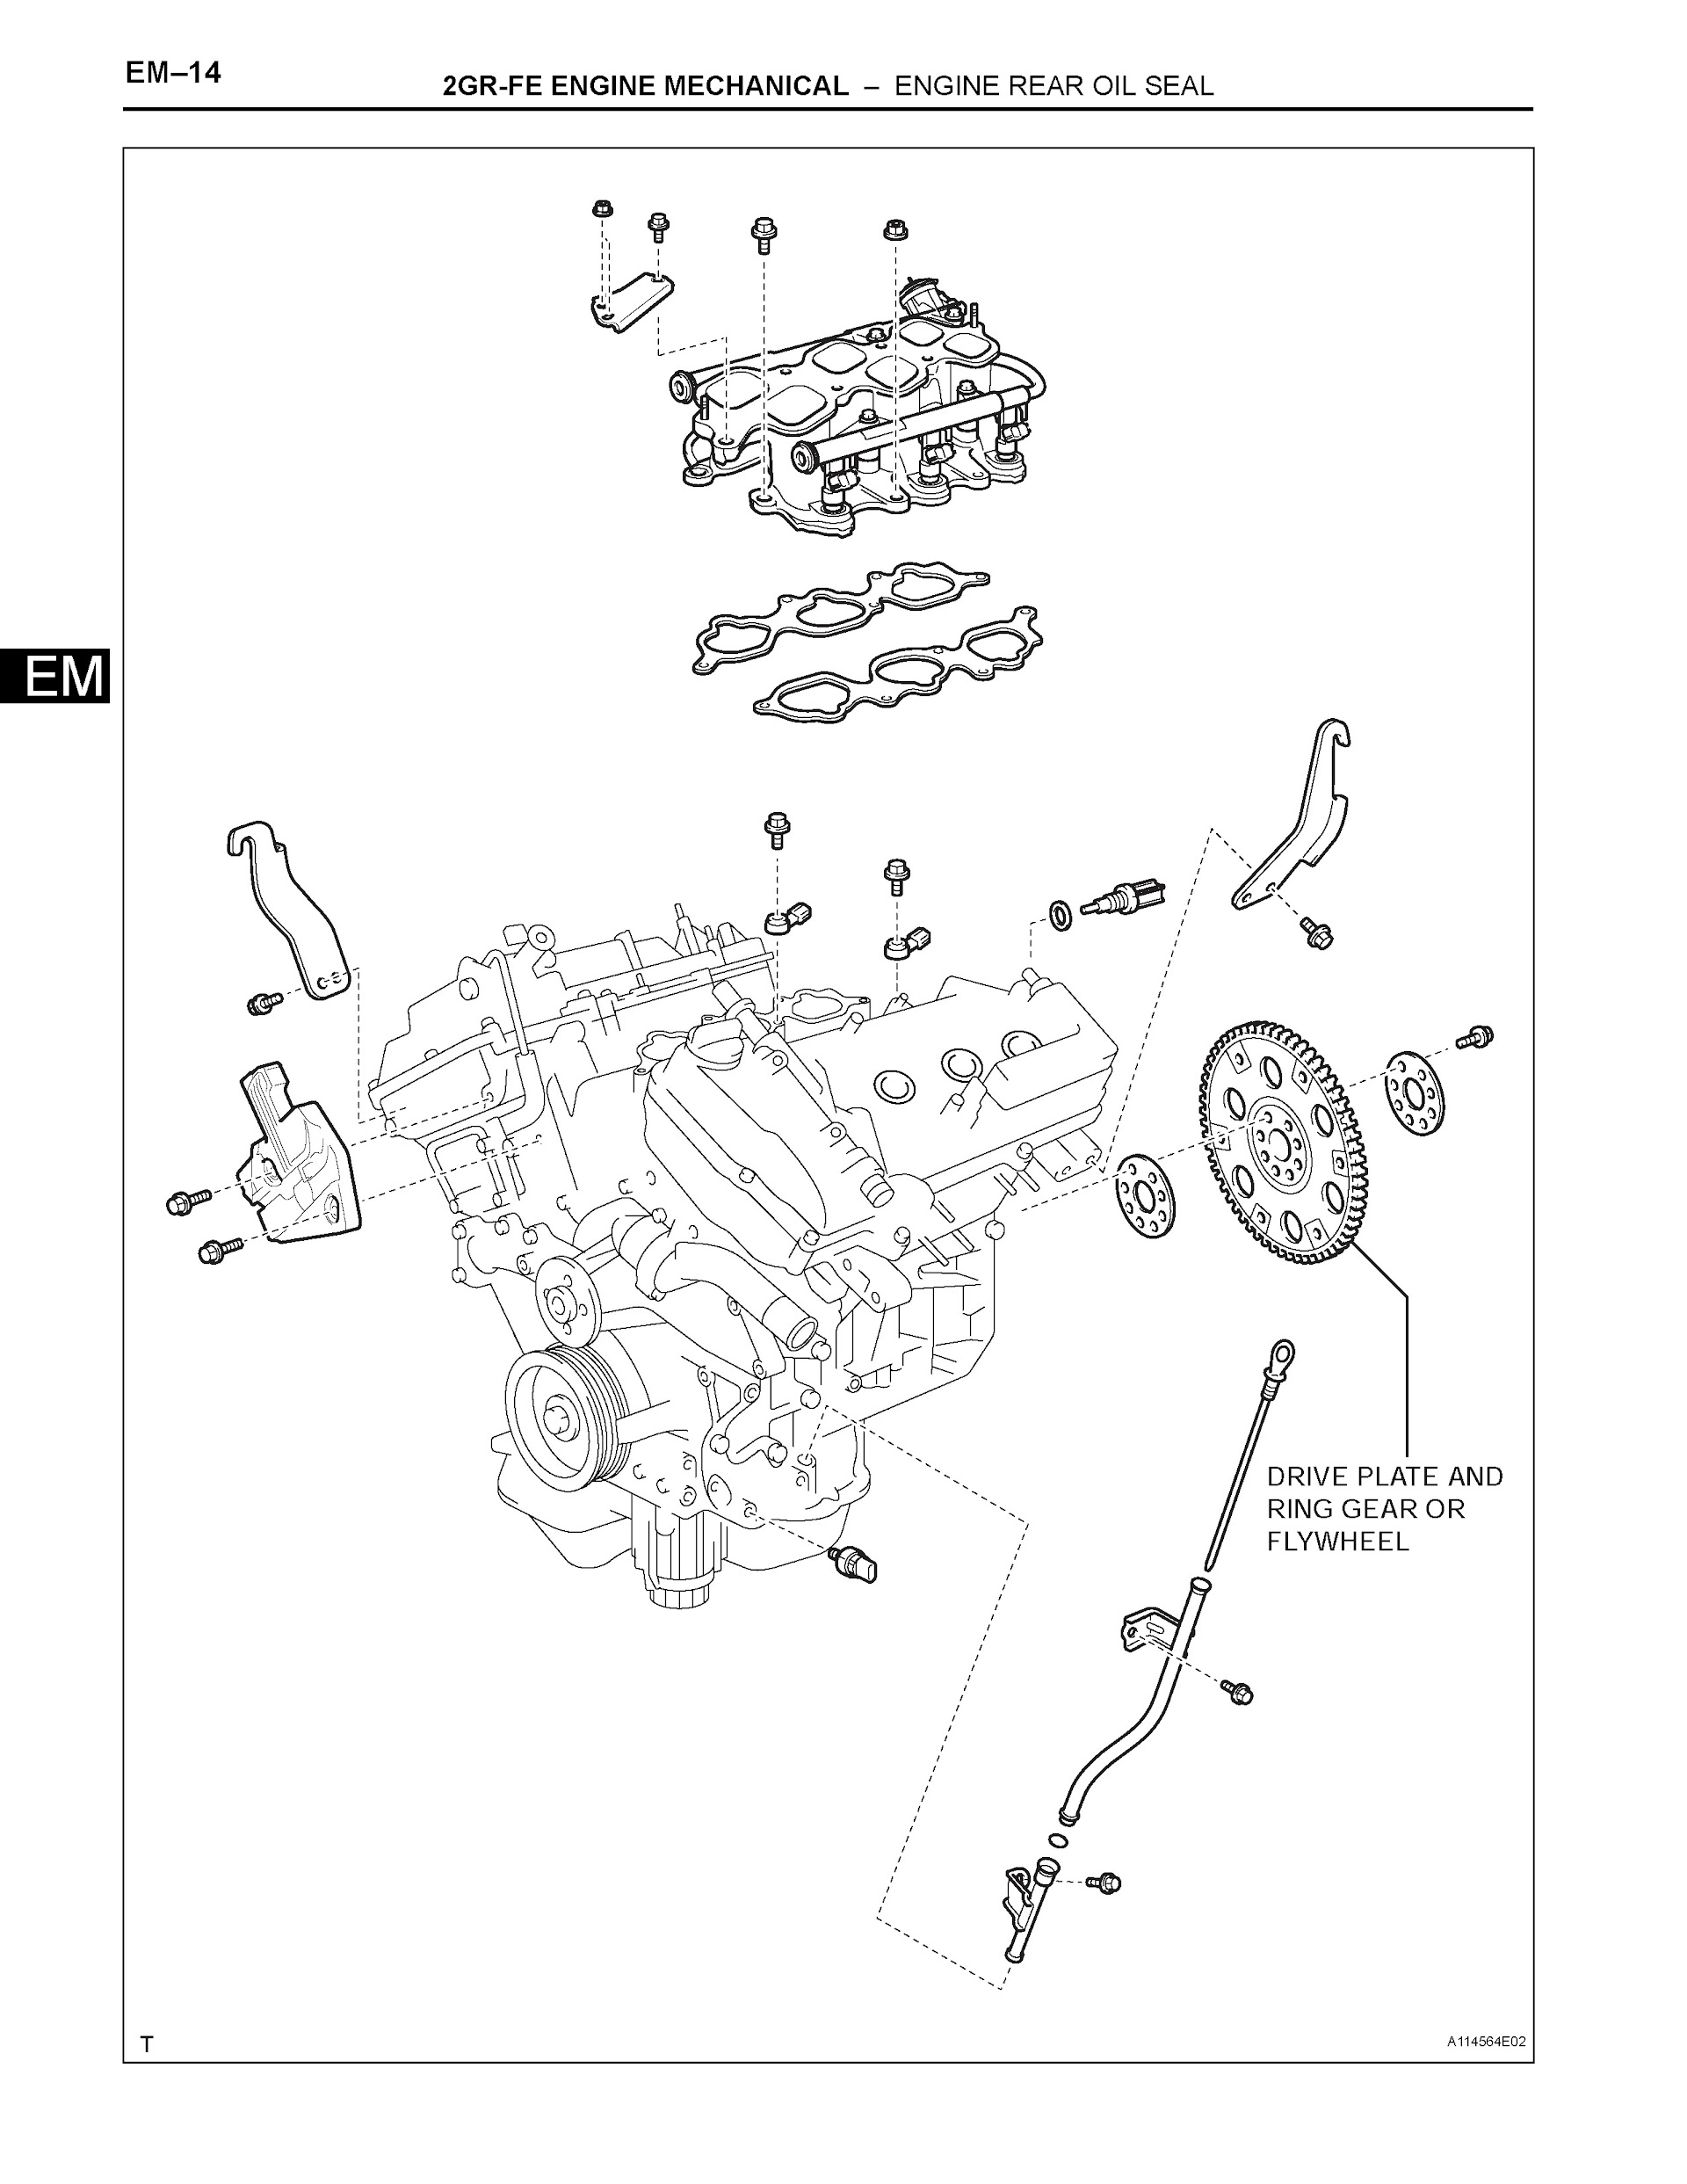 2006 Toyota Avalon Repair Manual, 2GR-FE Engine Mechanical